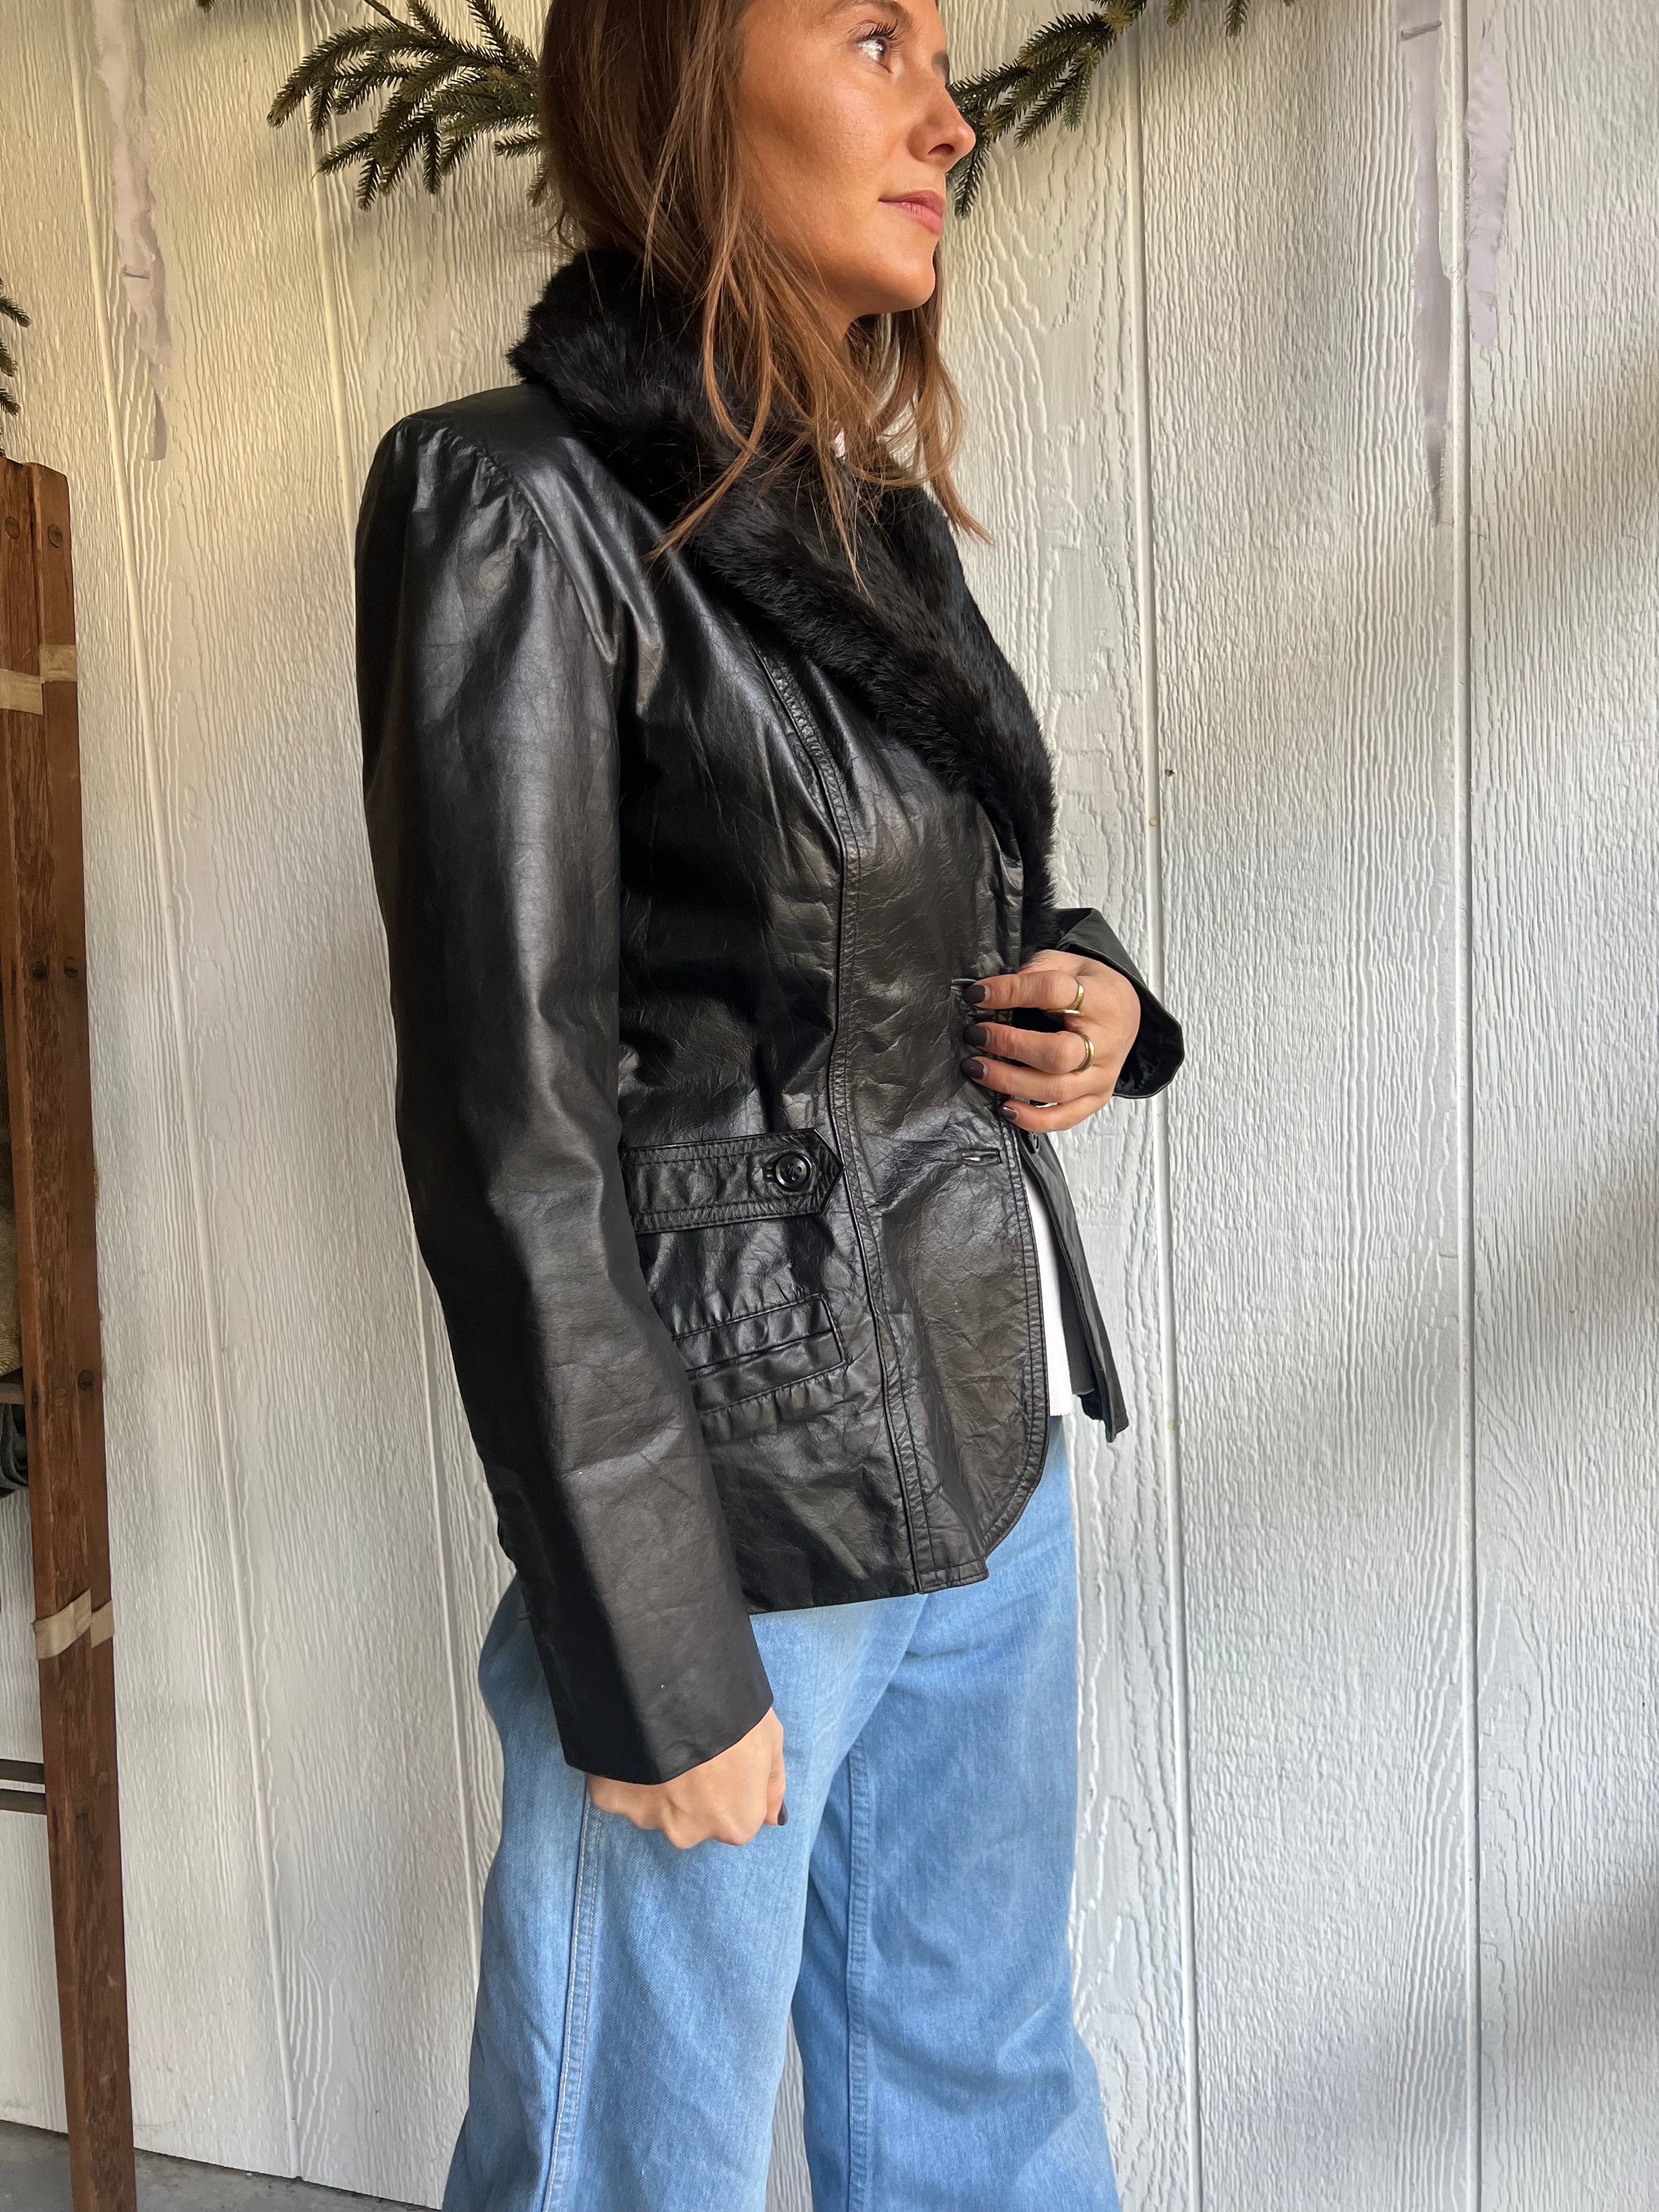 Black Leather + Fur Blazer